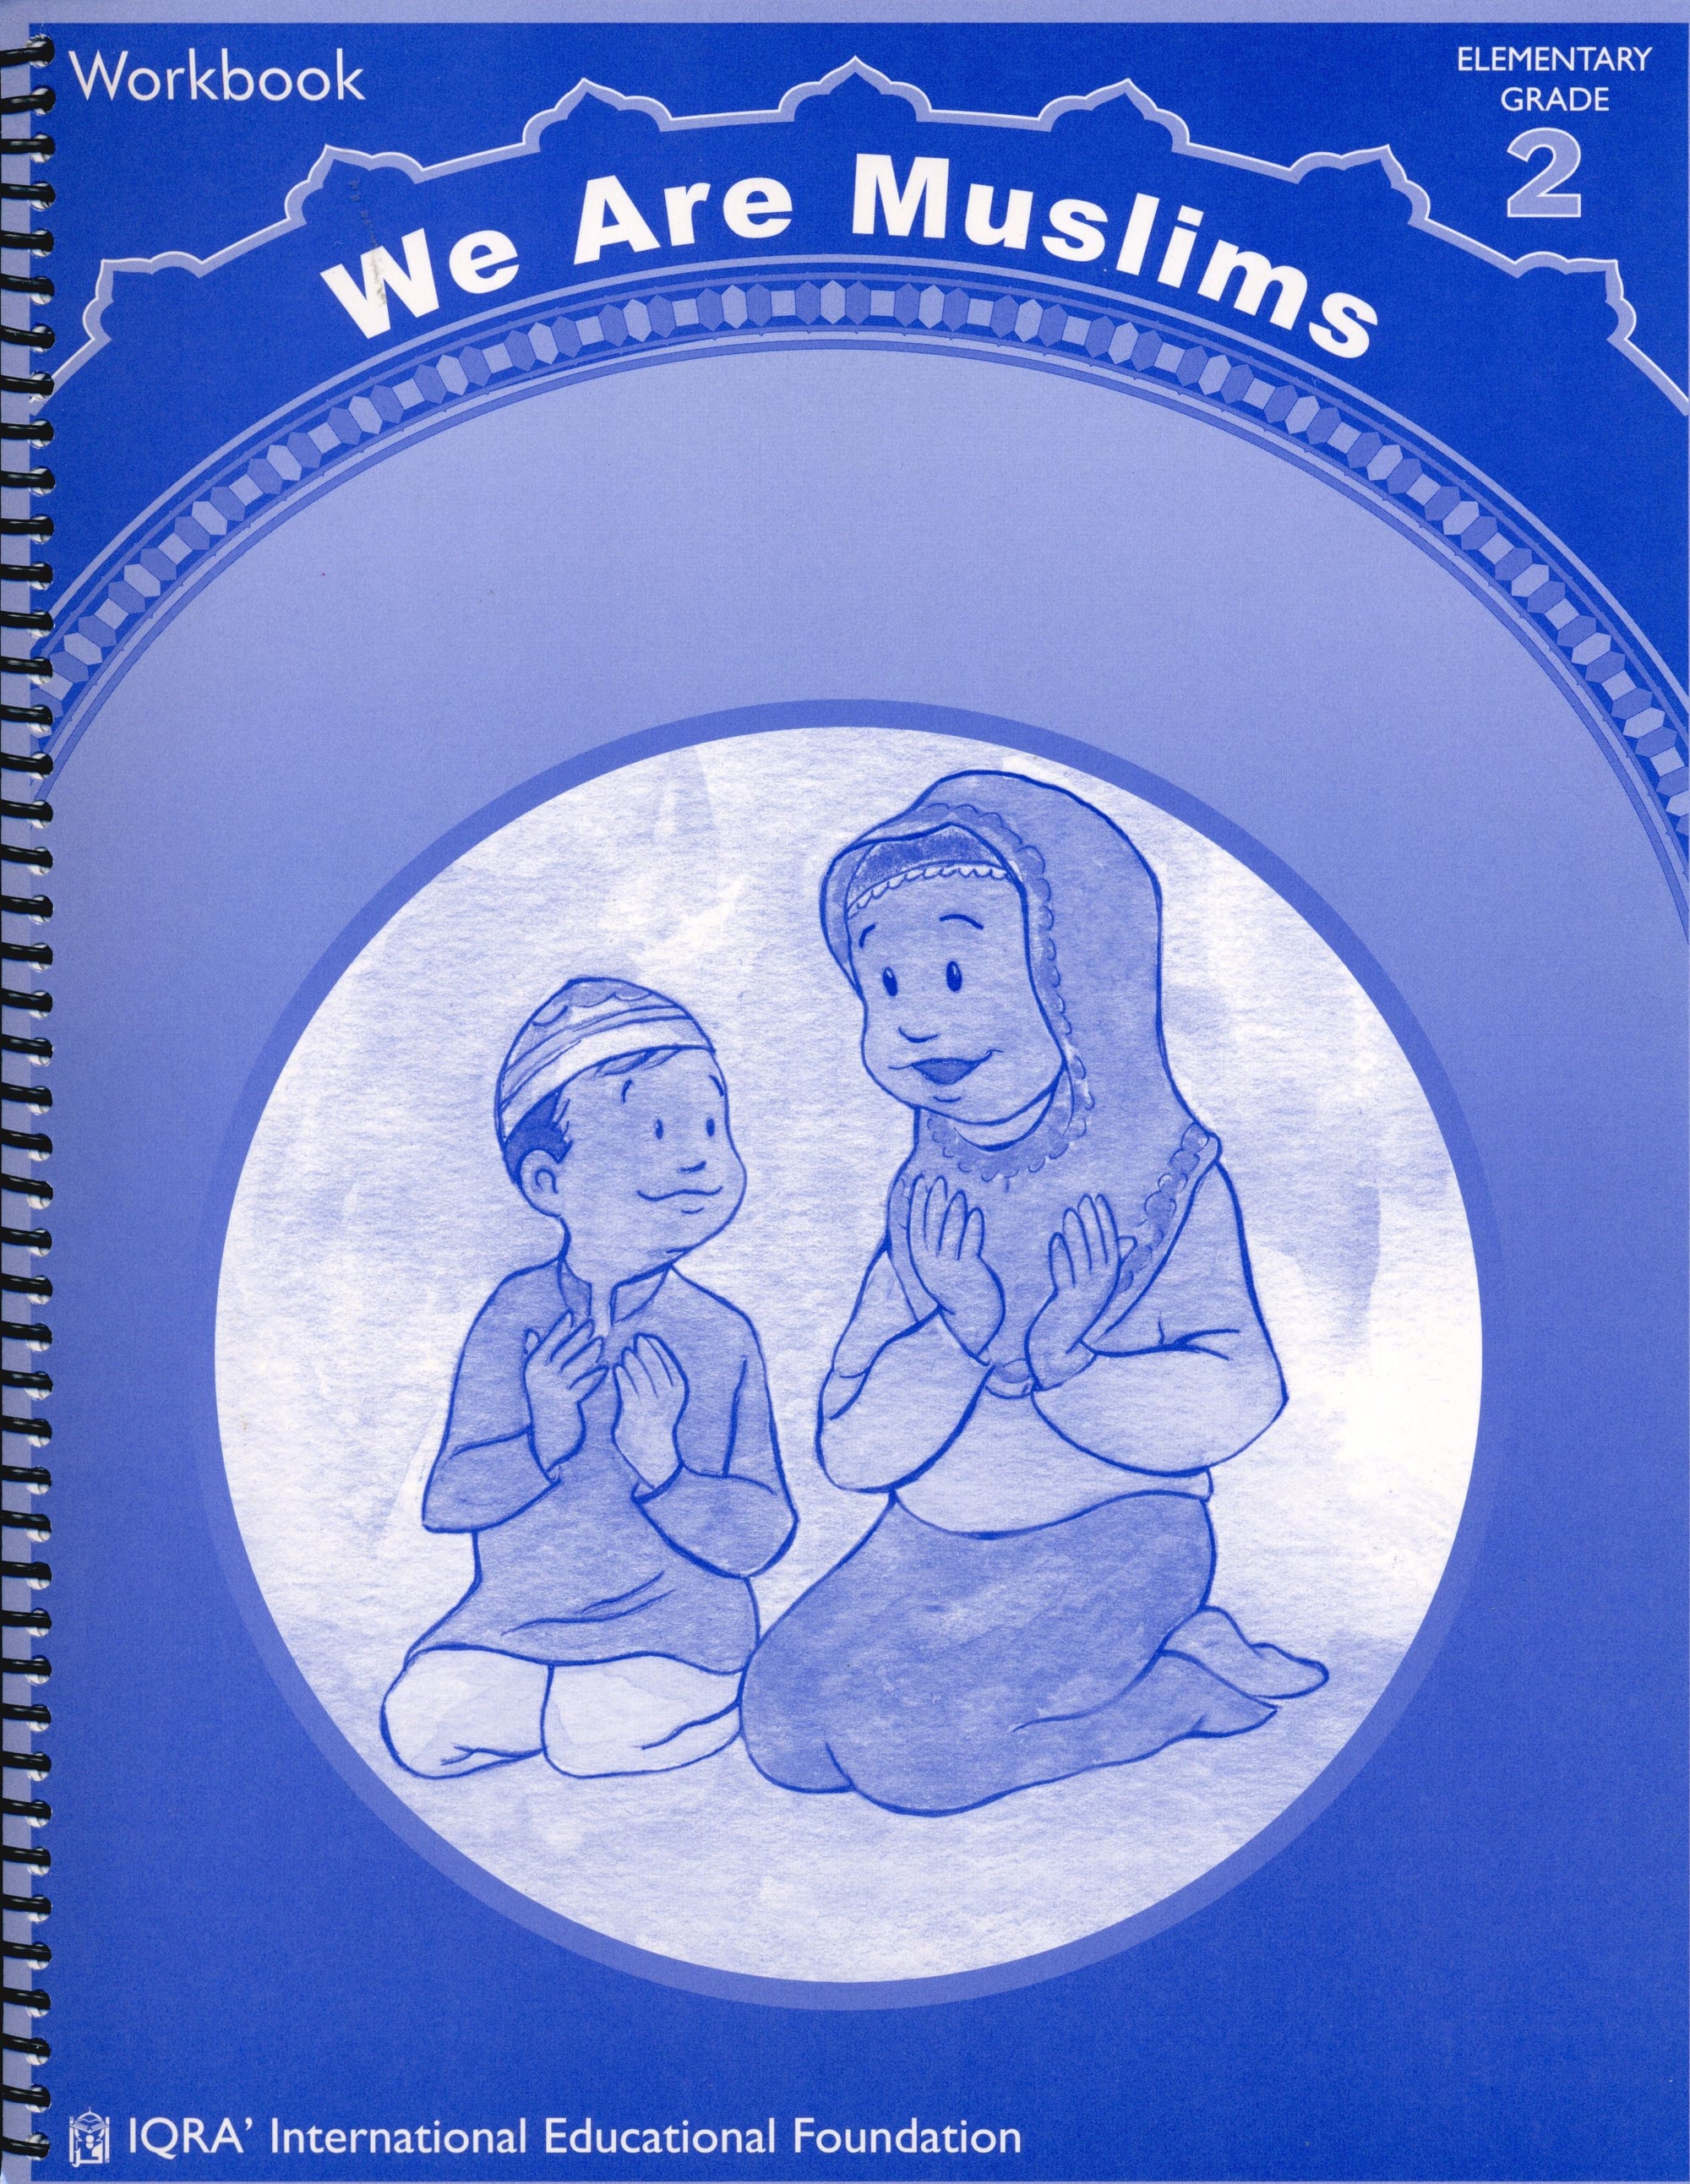 We Are Muslims Workbook Grade 2